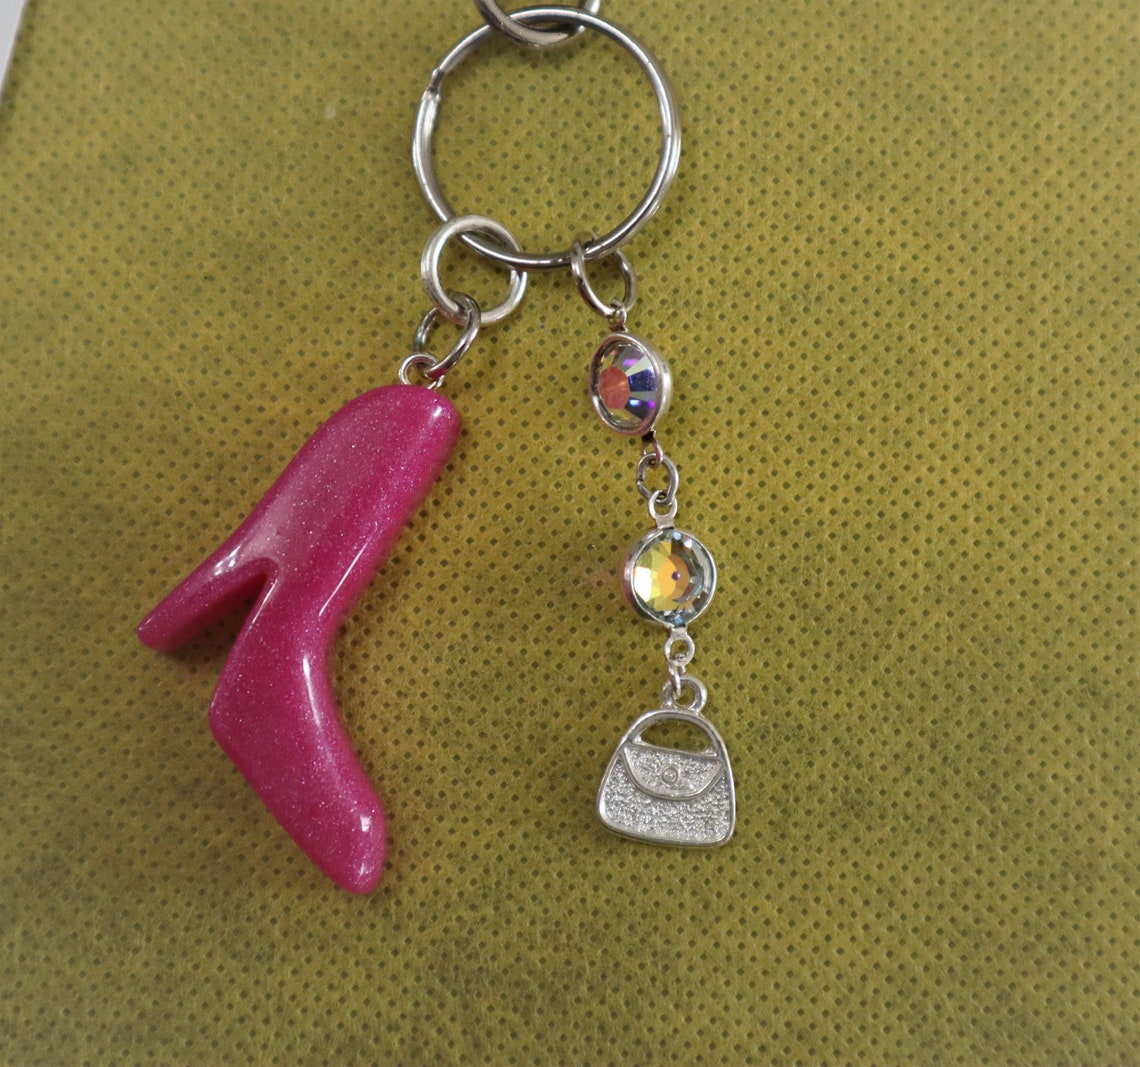 Bright pink high heeled shoe keychain | Etsy